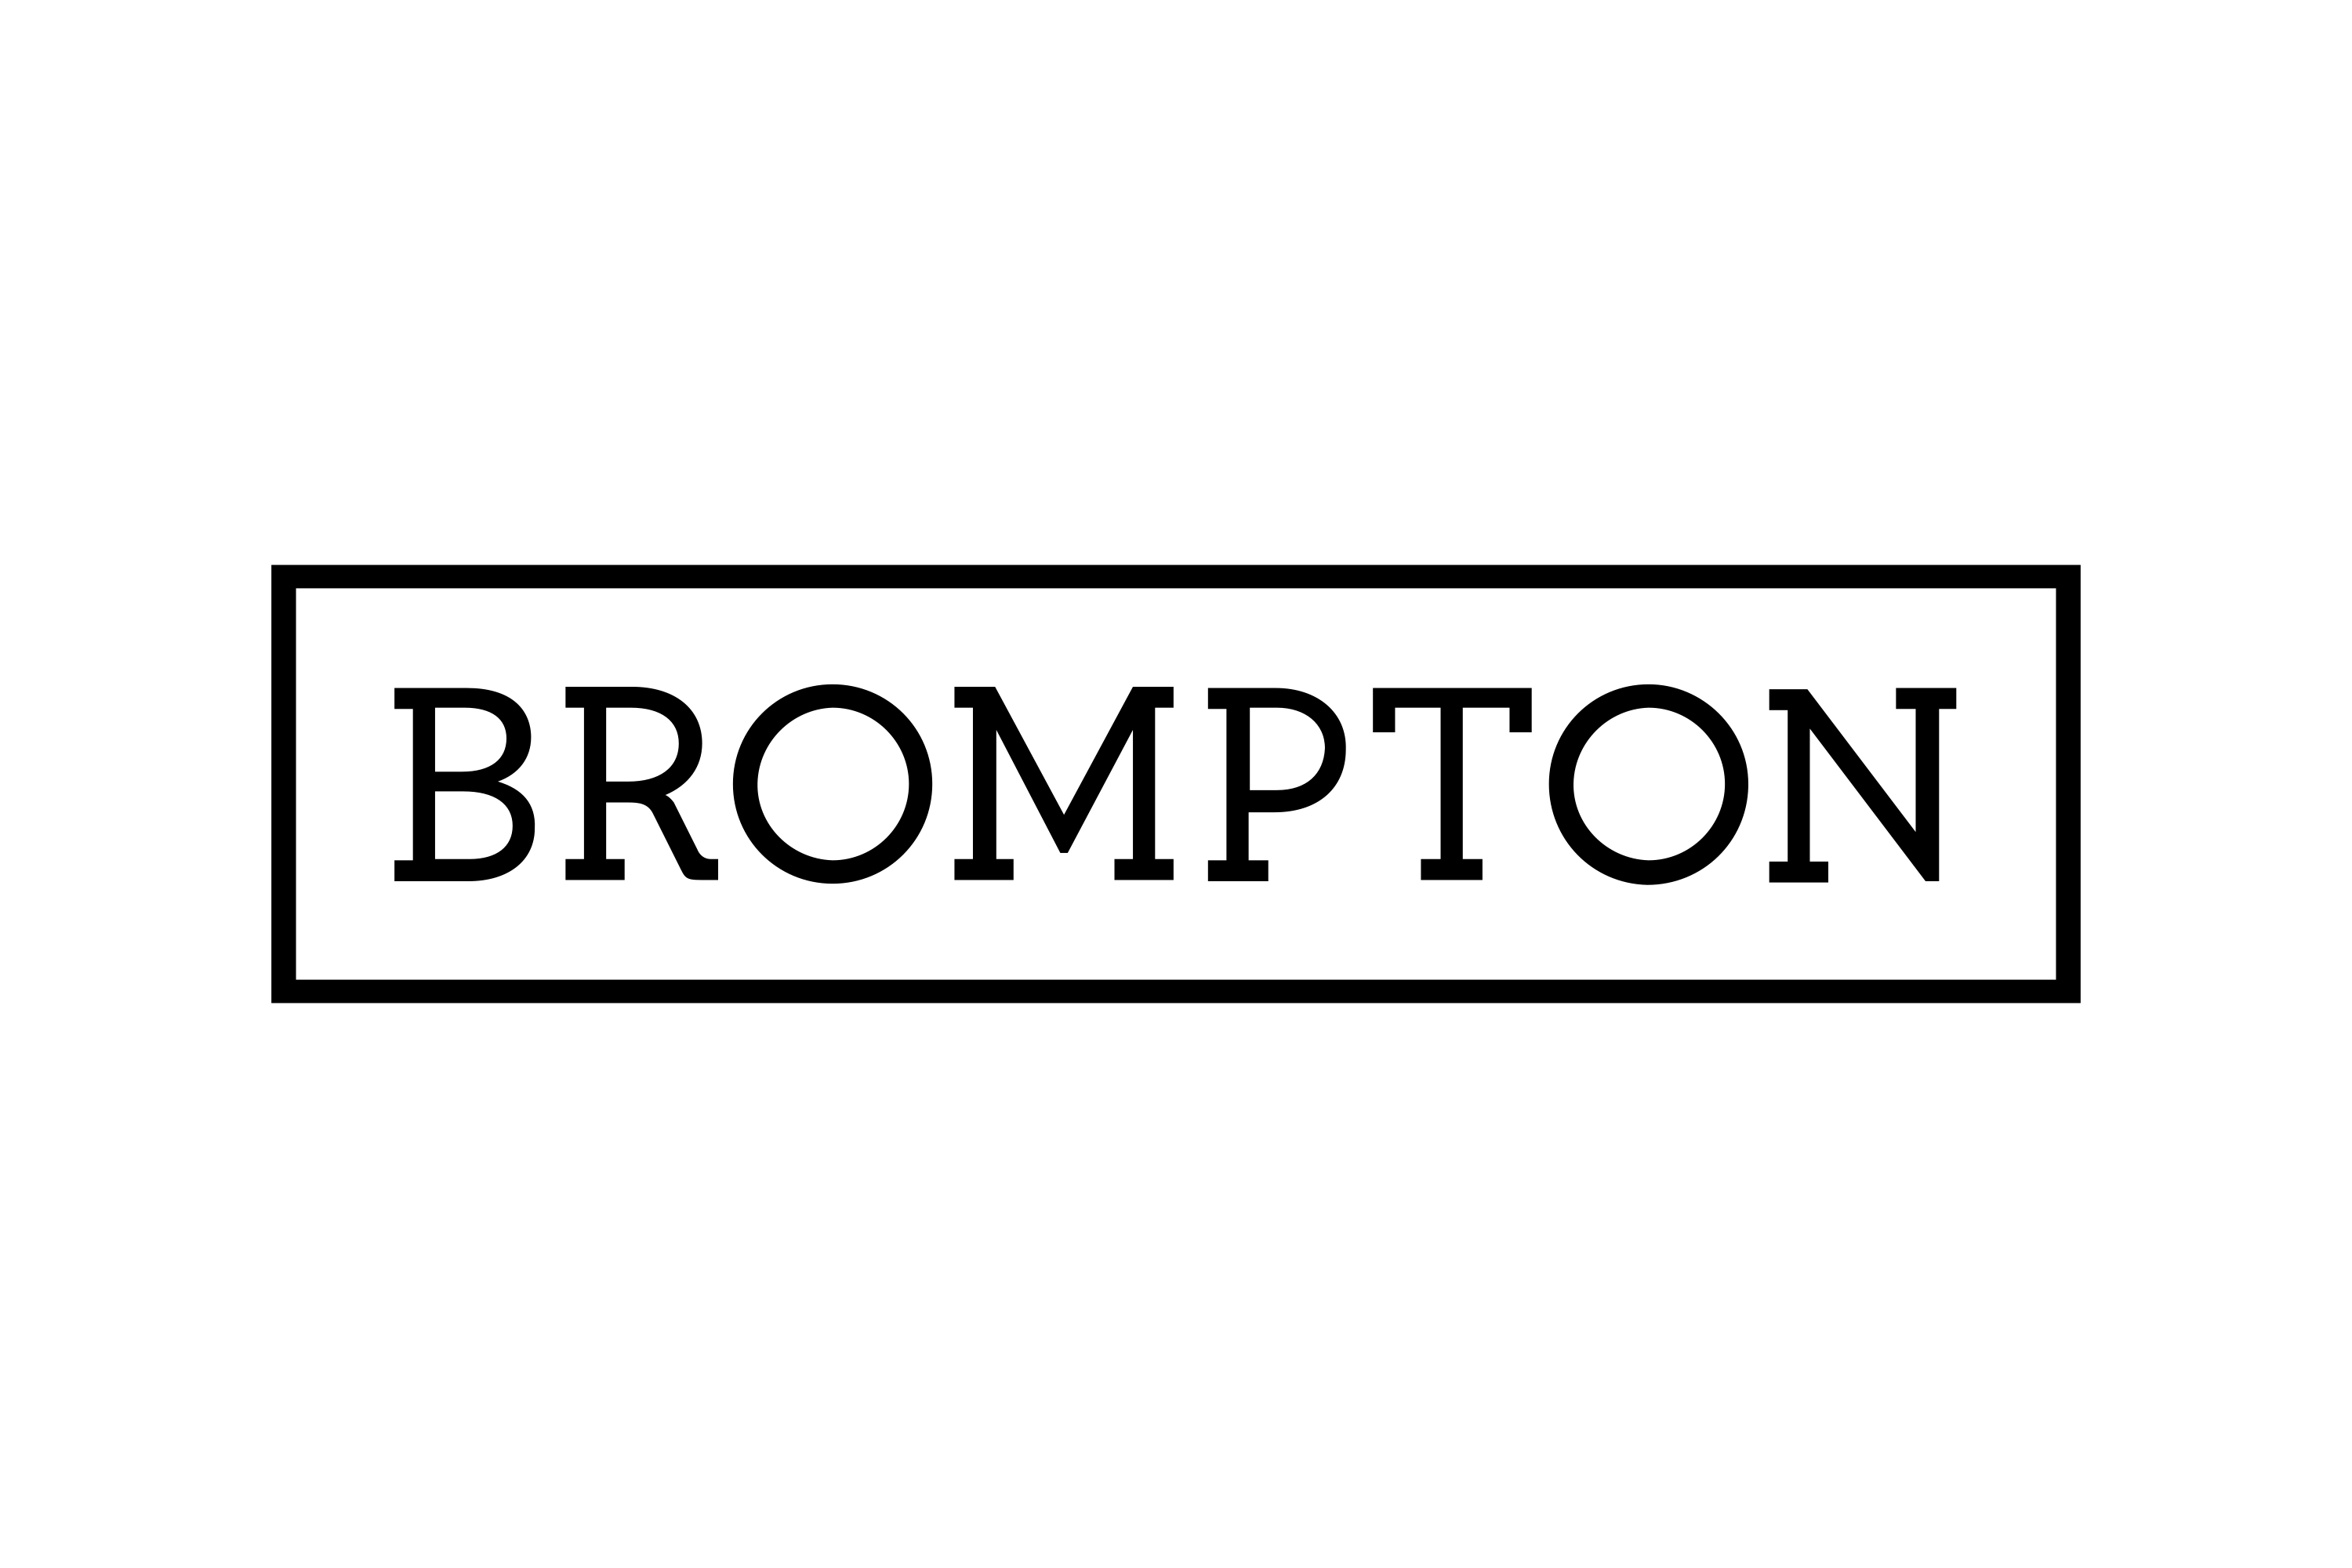 Company logo image - Brompton Bicycle Ltd